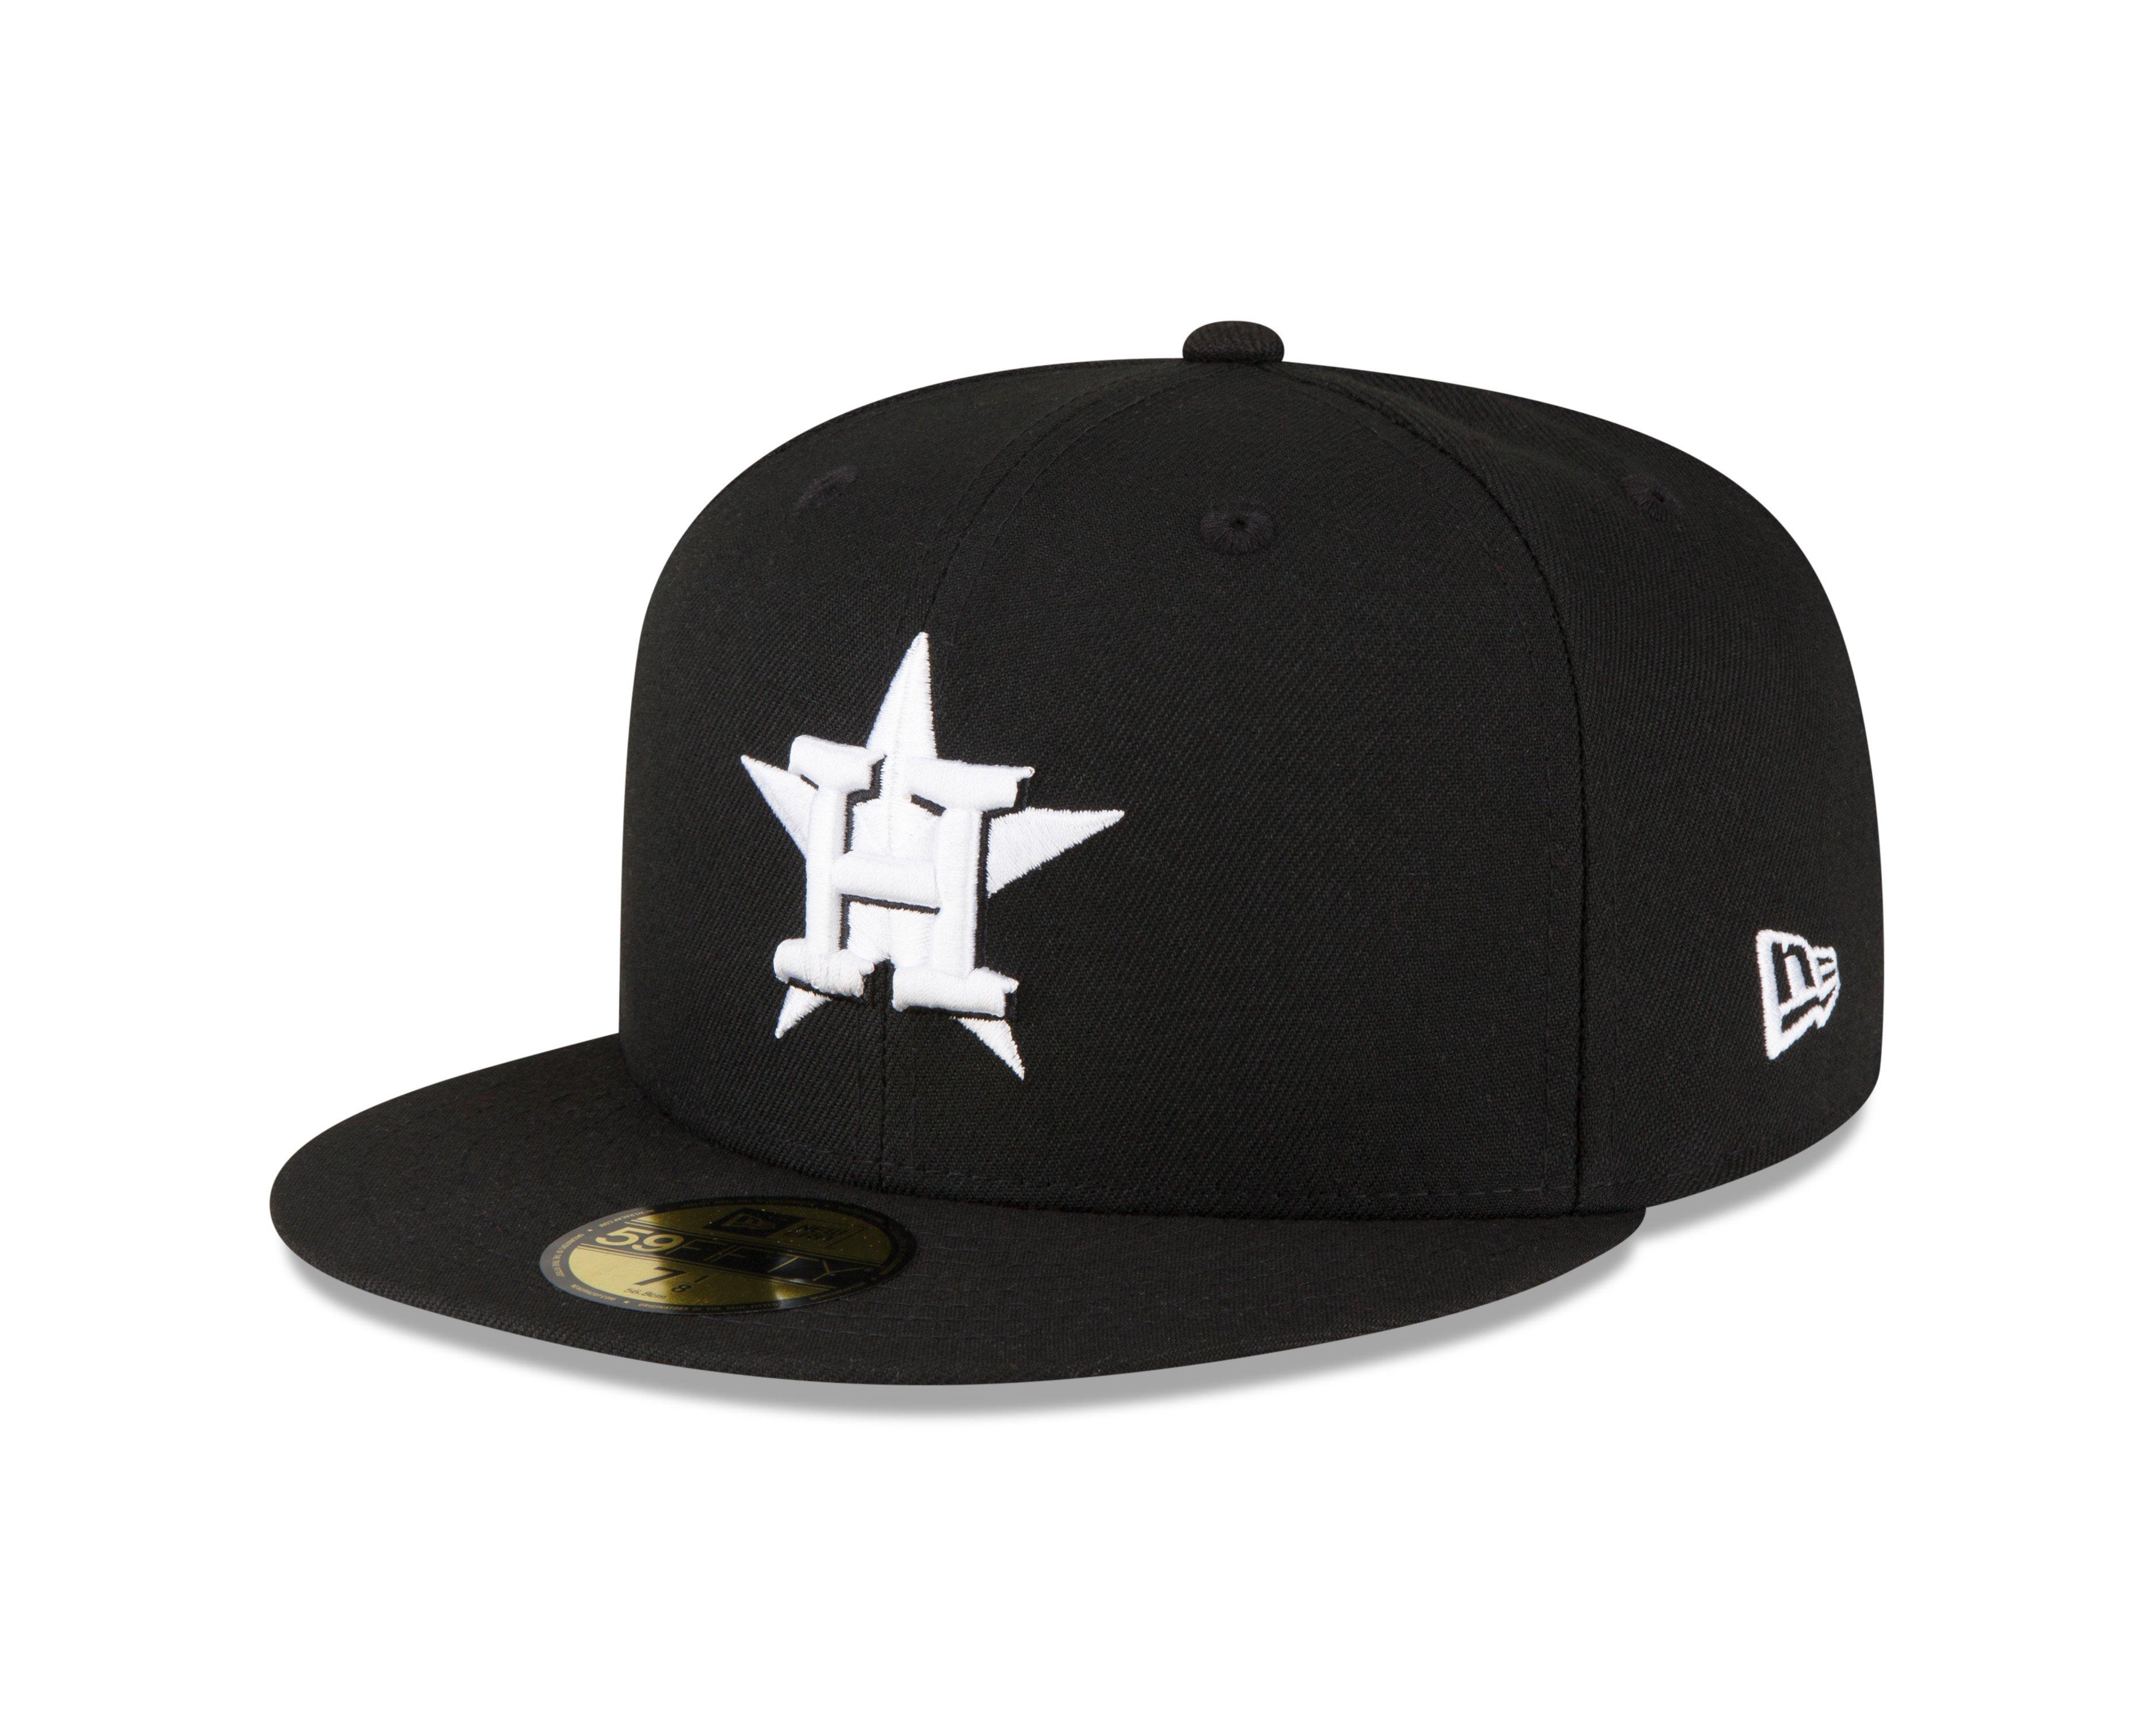 New Era Houston Astros 59FIFTY Fitted Hat - Hibbett